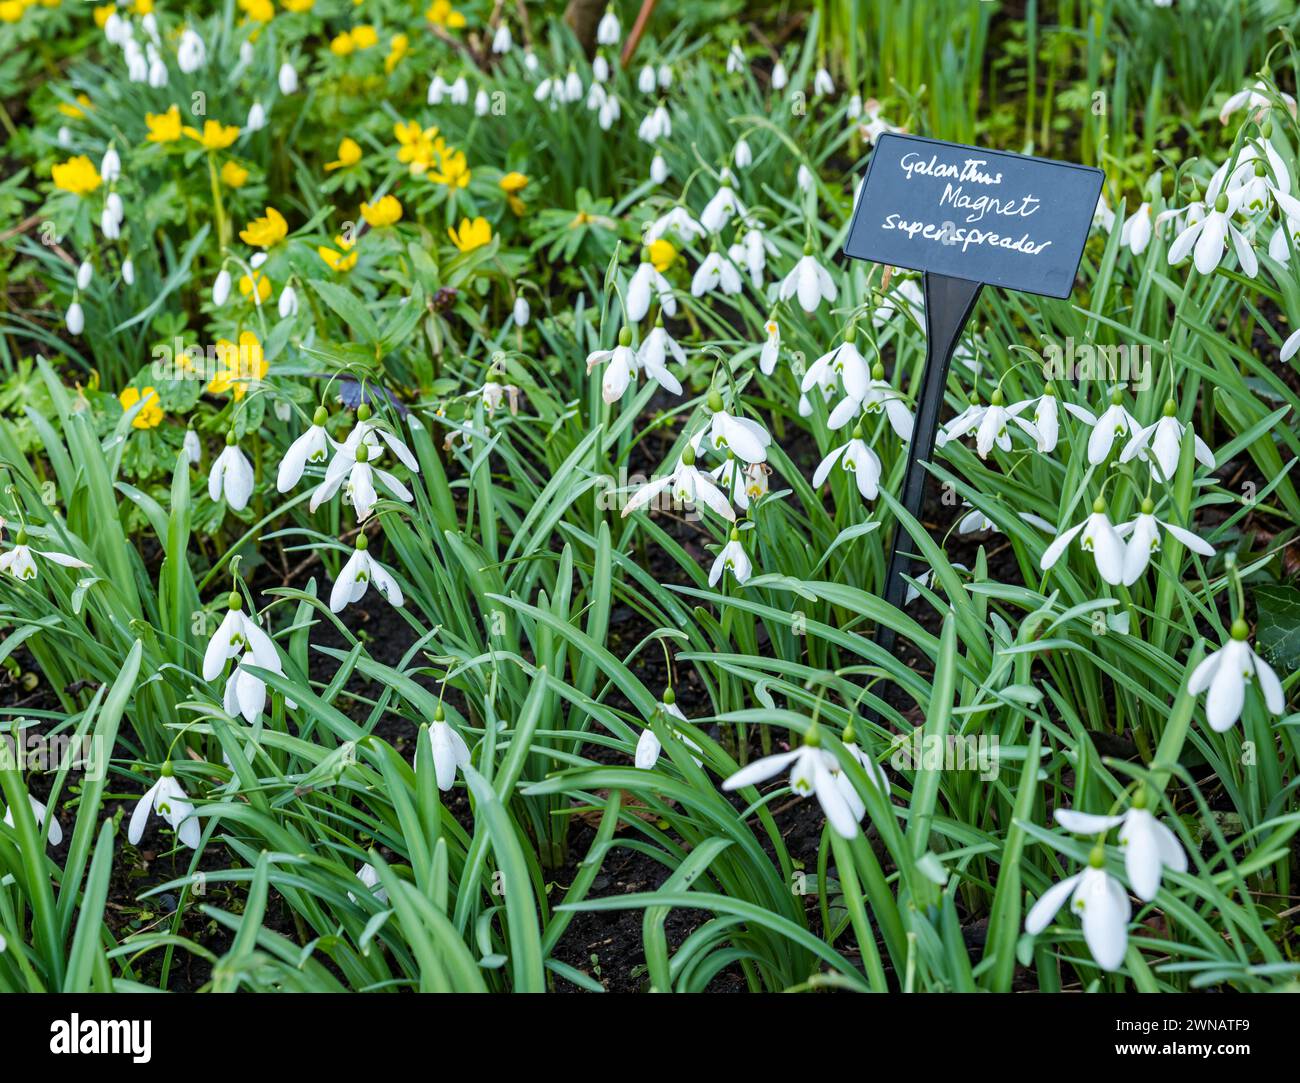 Snowdrops variety label (Galanthus Magnet super spreader), Scotland, UK Stock Photo